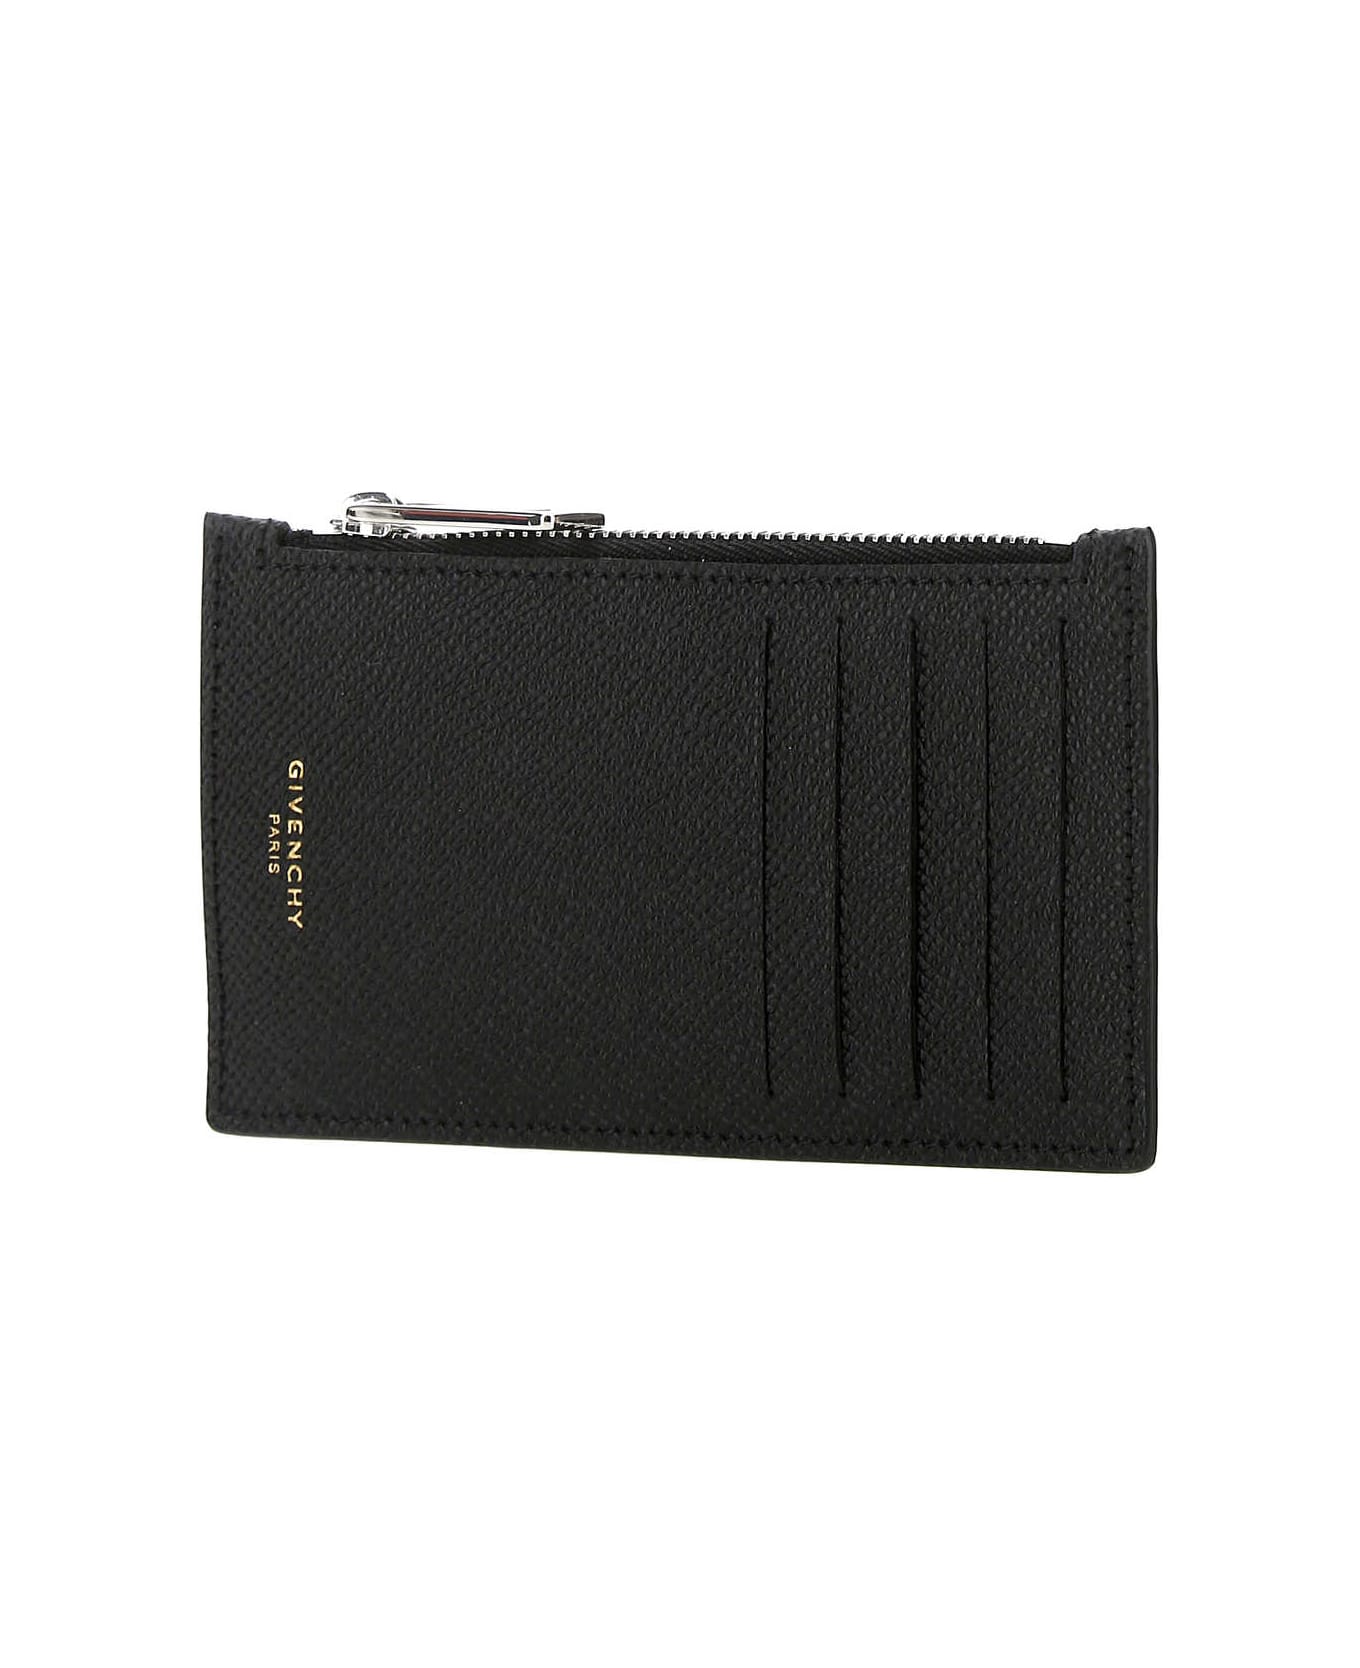 Givenchy Black Leather Card Holder - 001